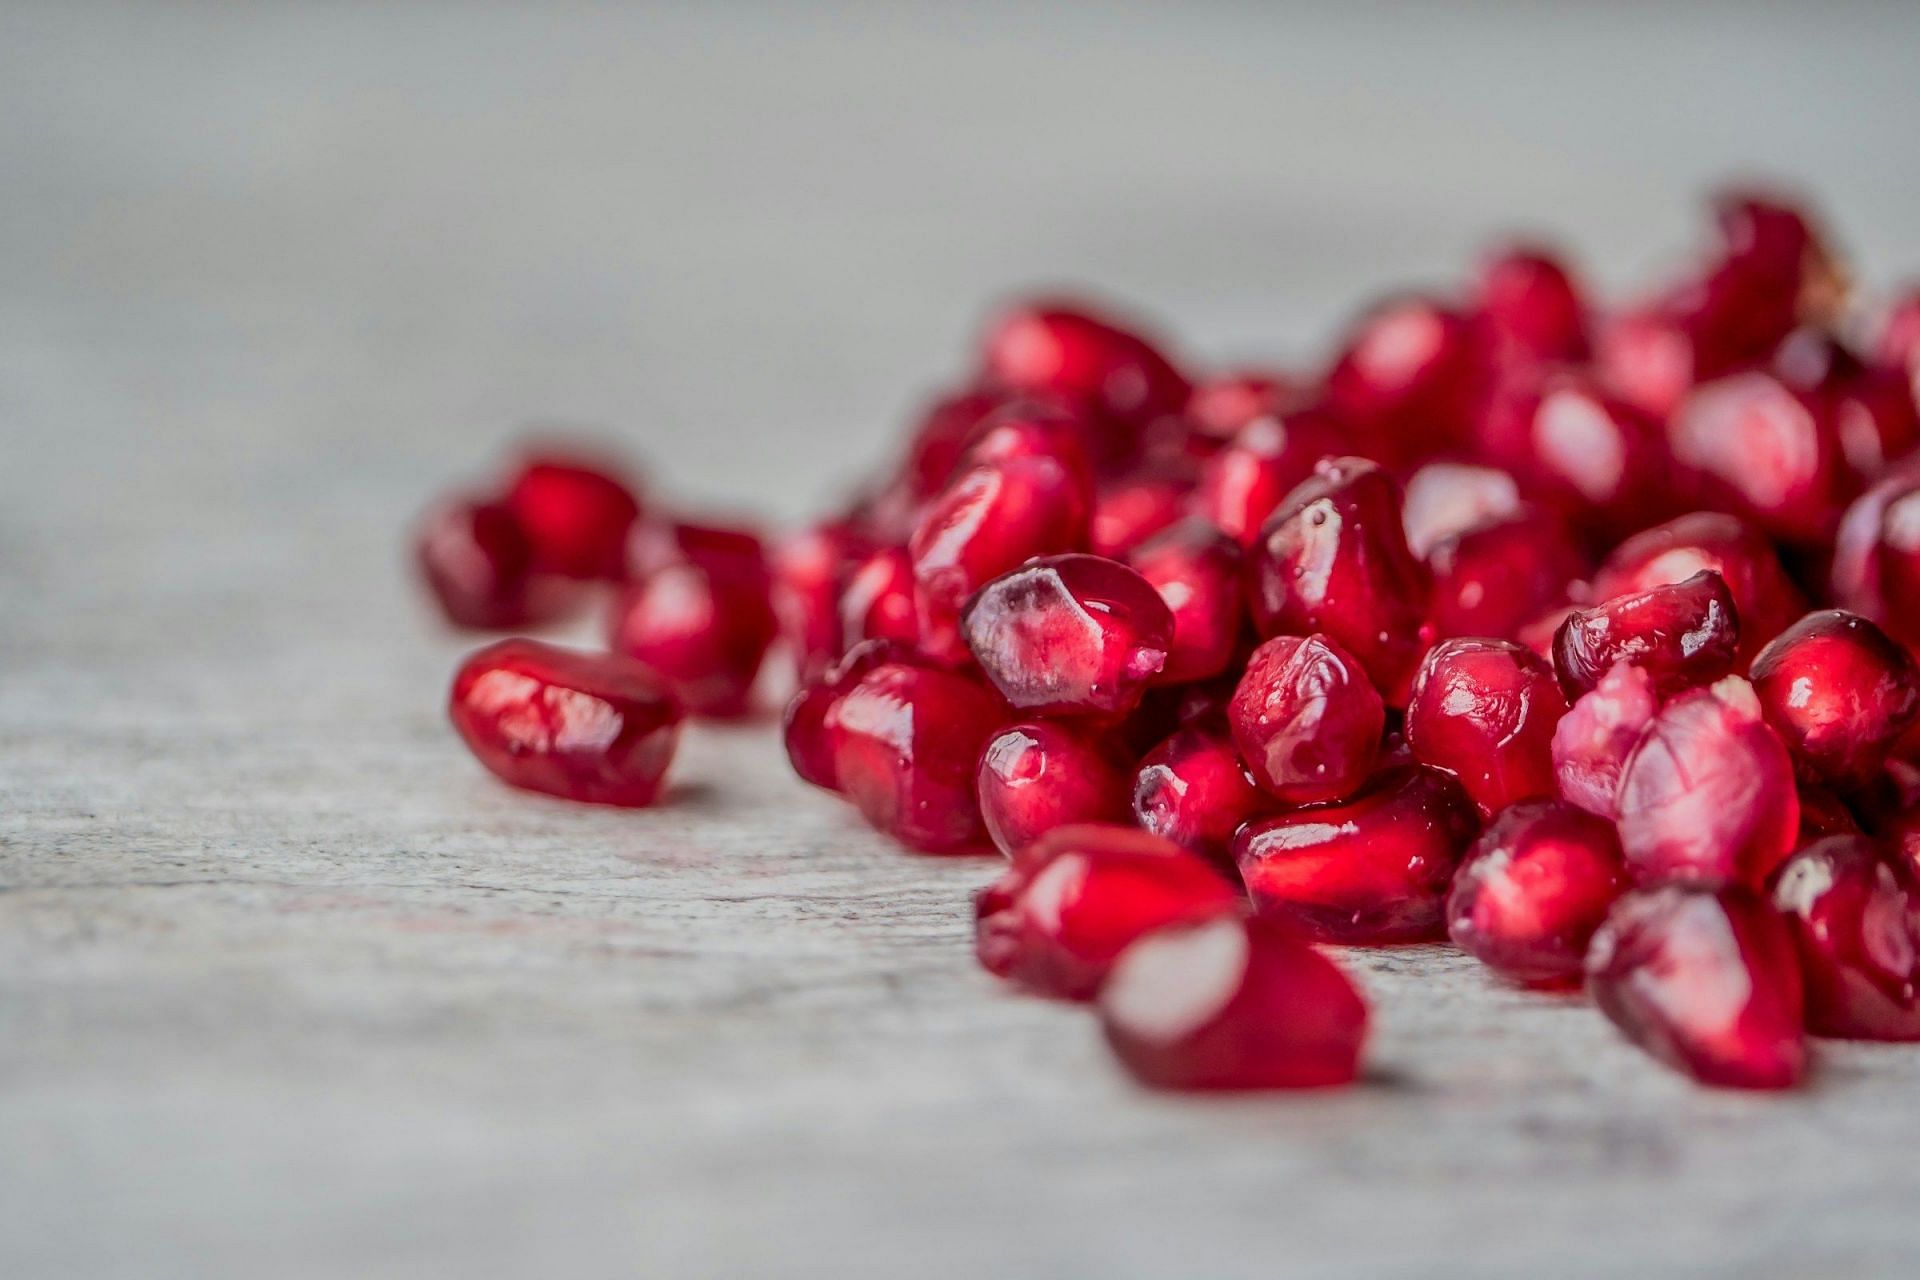 Pomegranate benefits for skin (Image via Unsplash/Kiley)